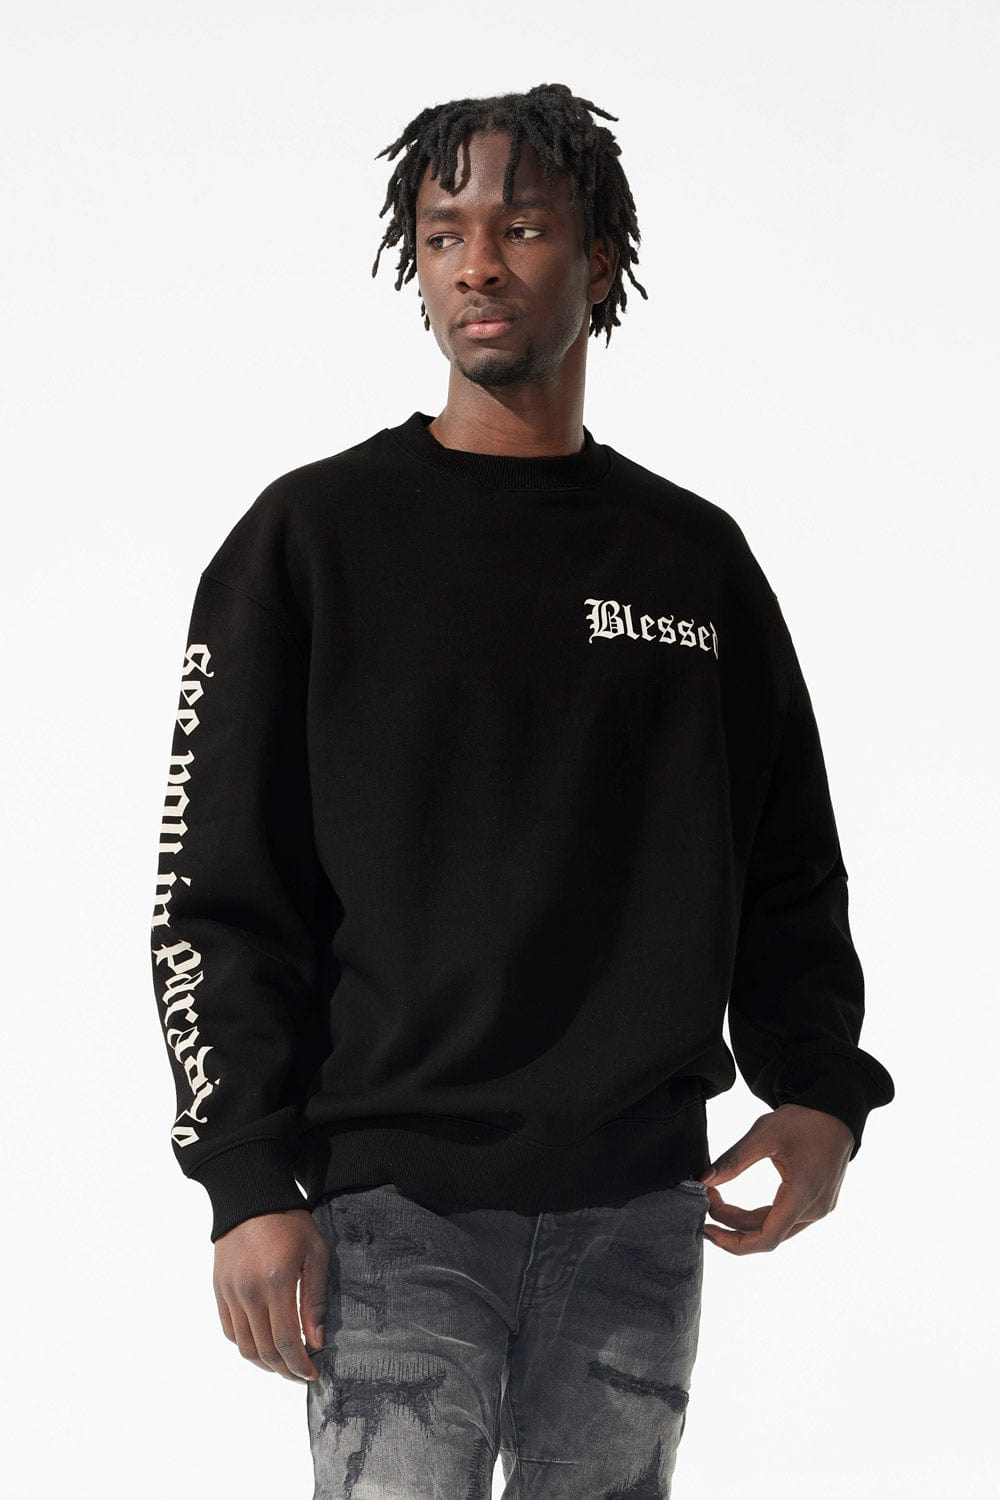 Blessed Crewneck Sweatshirt (Black)